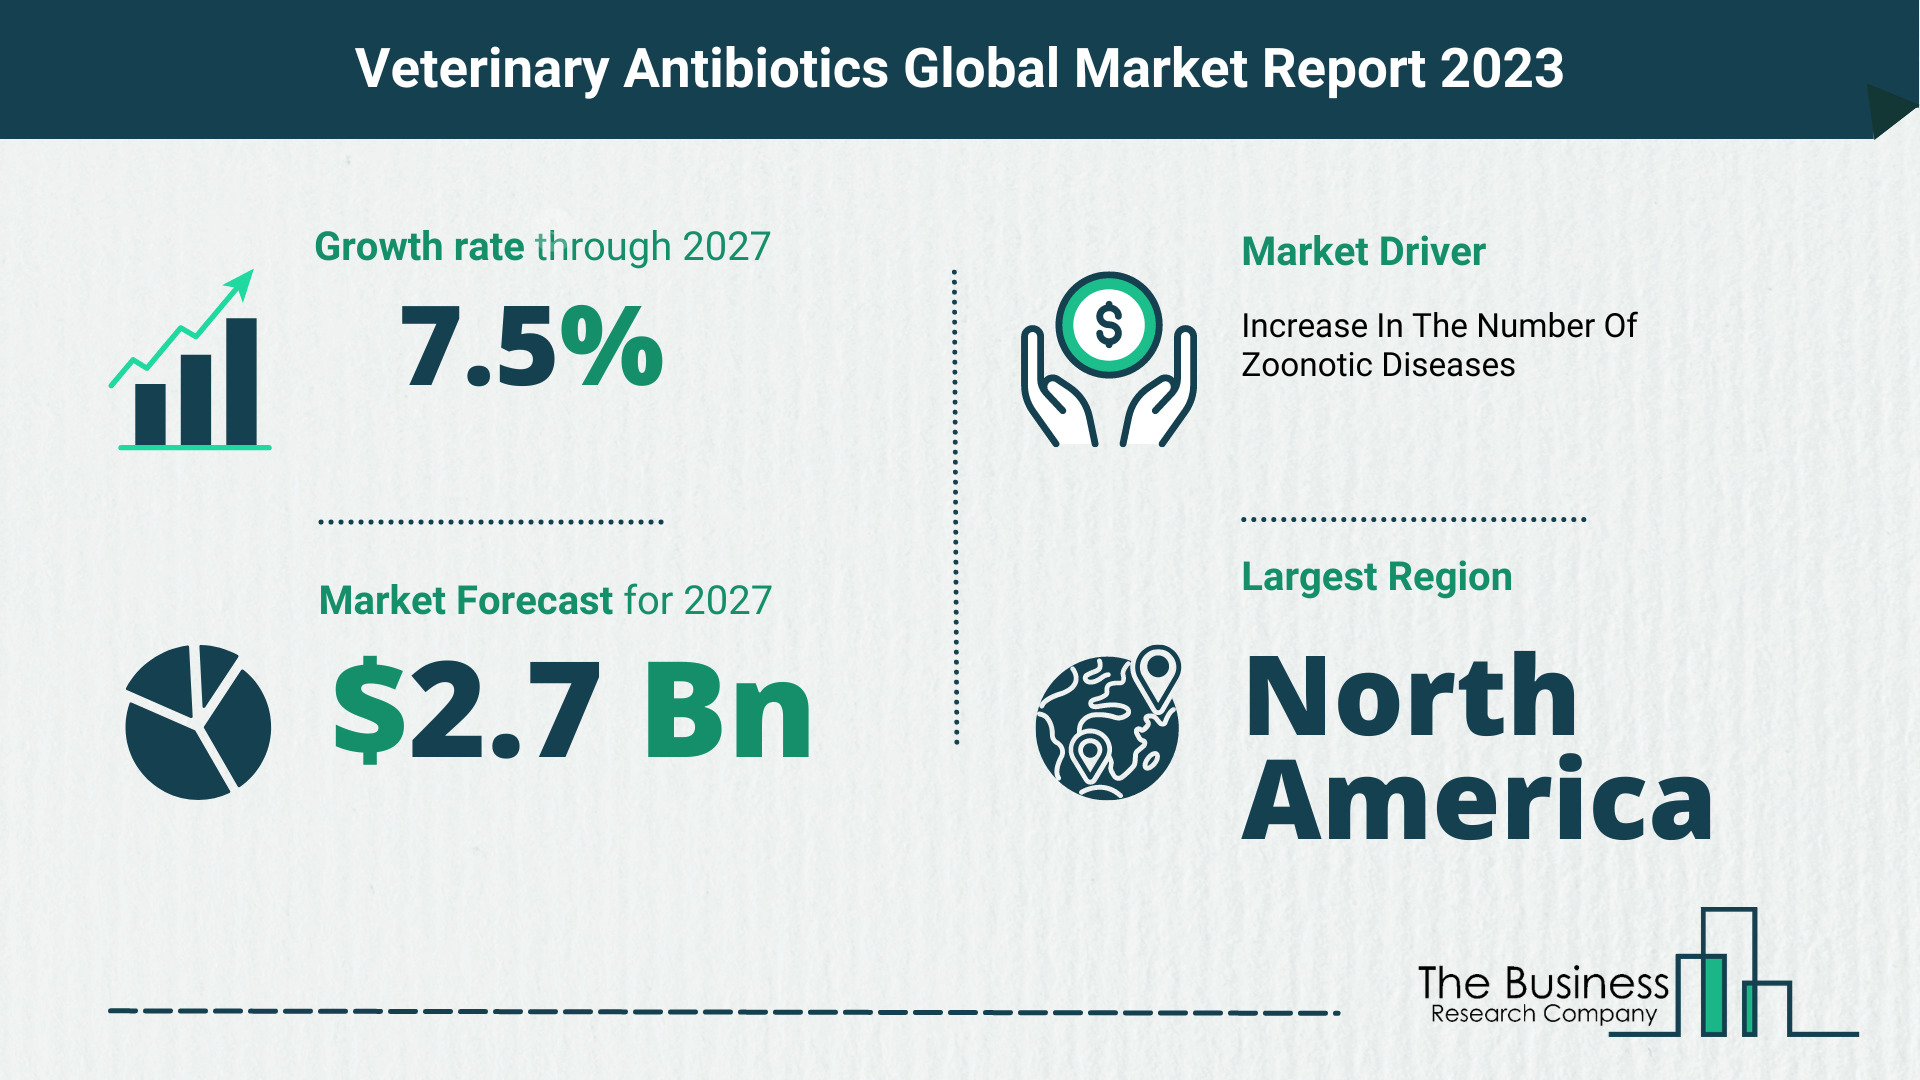 Global Veterinary Antibiotics Market